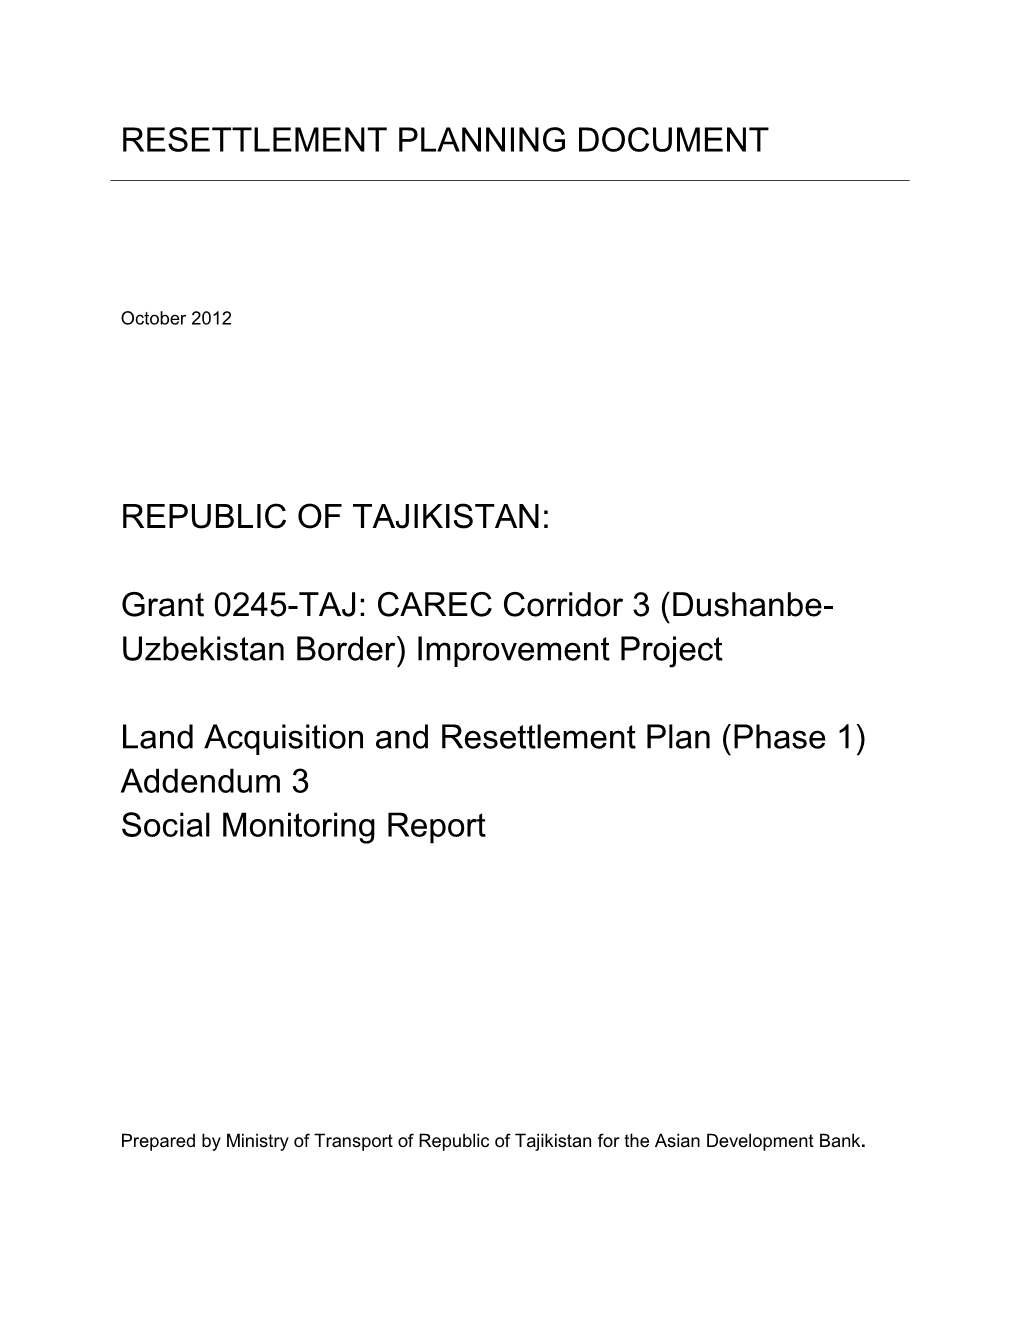 SMR: Tajikistan: CAREC Corridor 3 (Dushanbe-Uzbekistan Border) Improvement Project